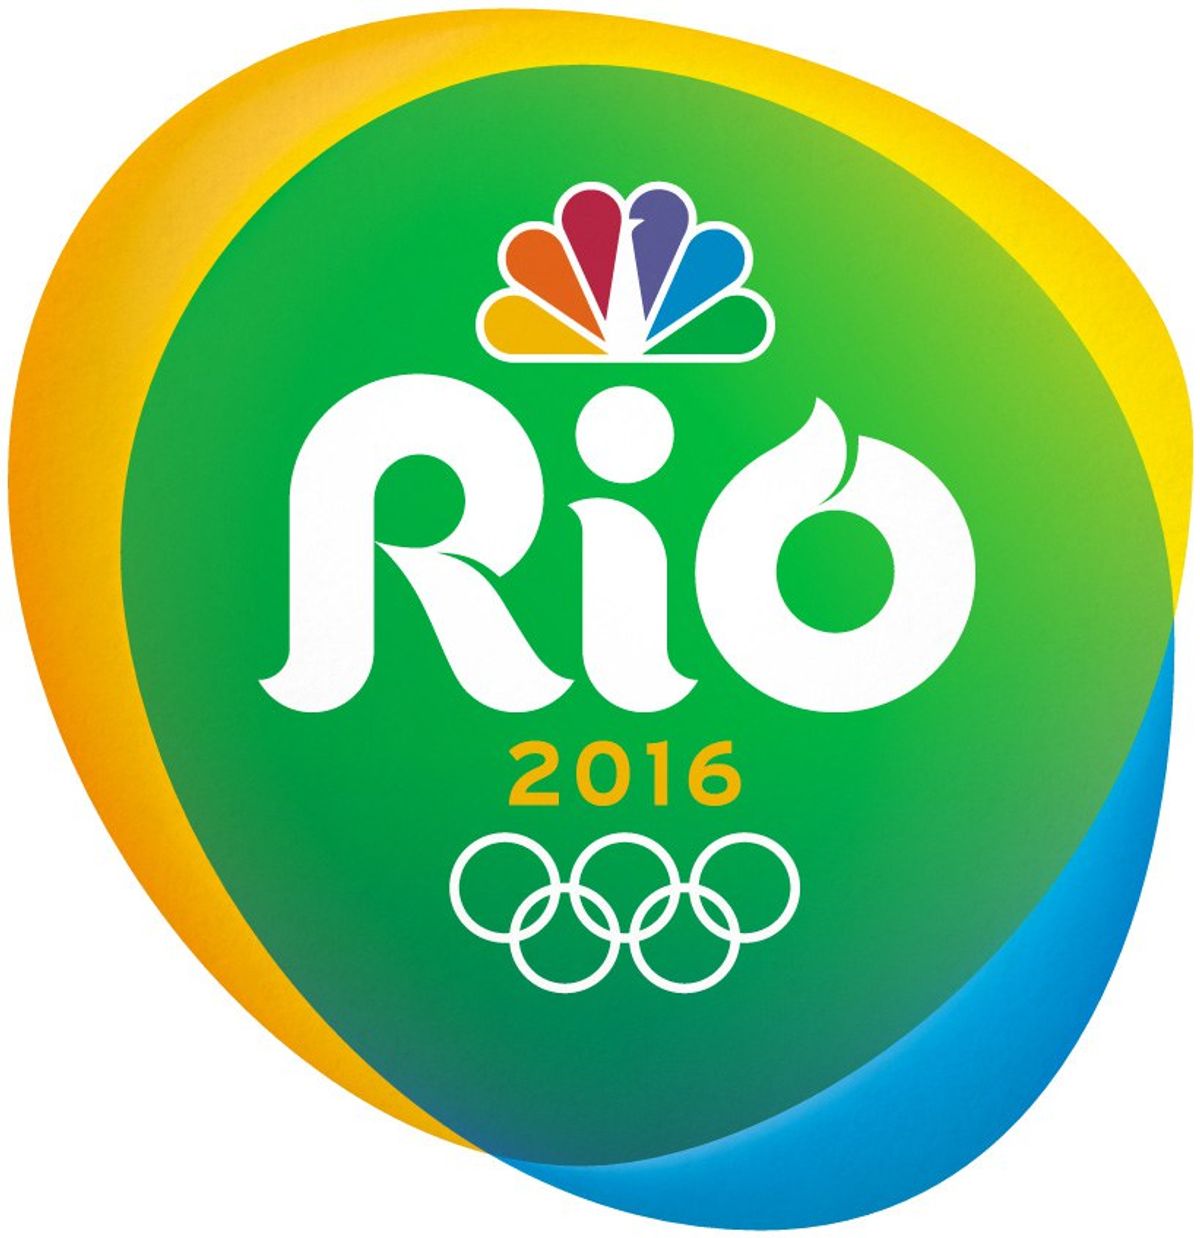 Rio 2016: A Slippery But Triumphant Olympics